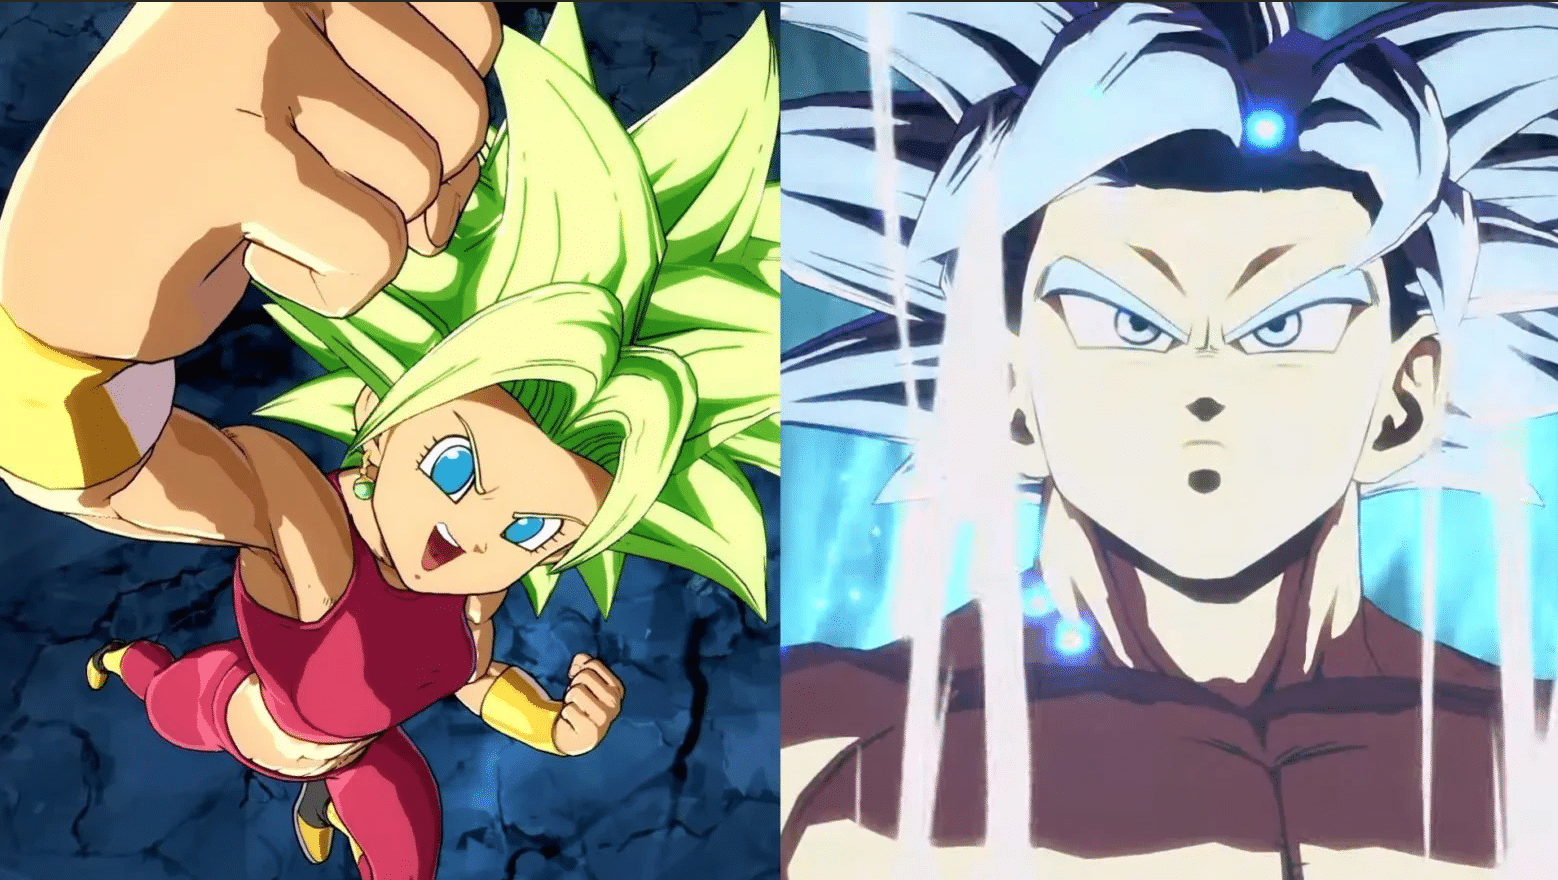 Kefla rejoint Goku Ultra Instinct dans le roster de Dragon Ball FighterZ